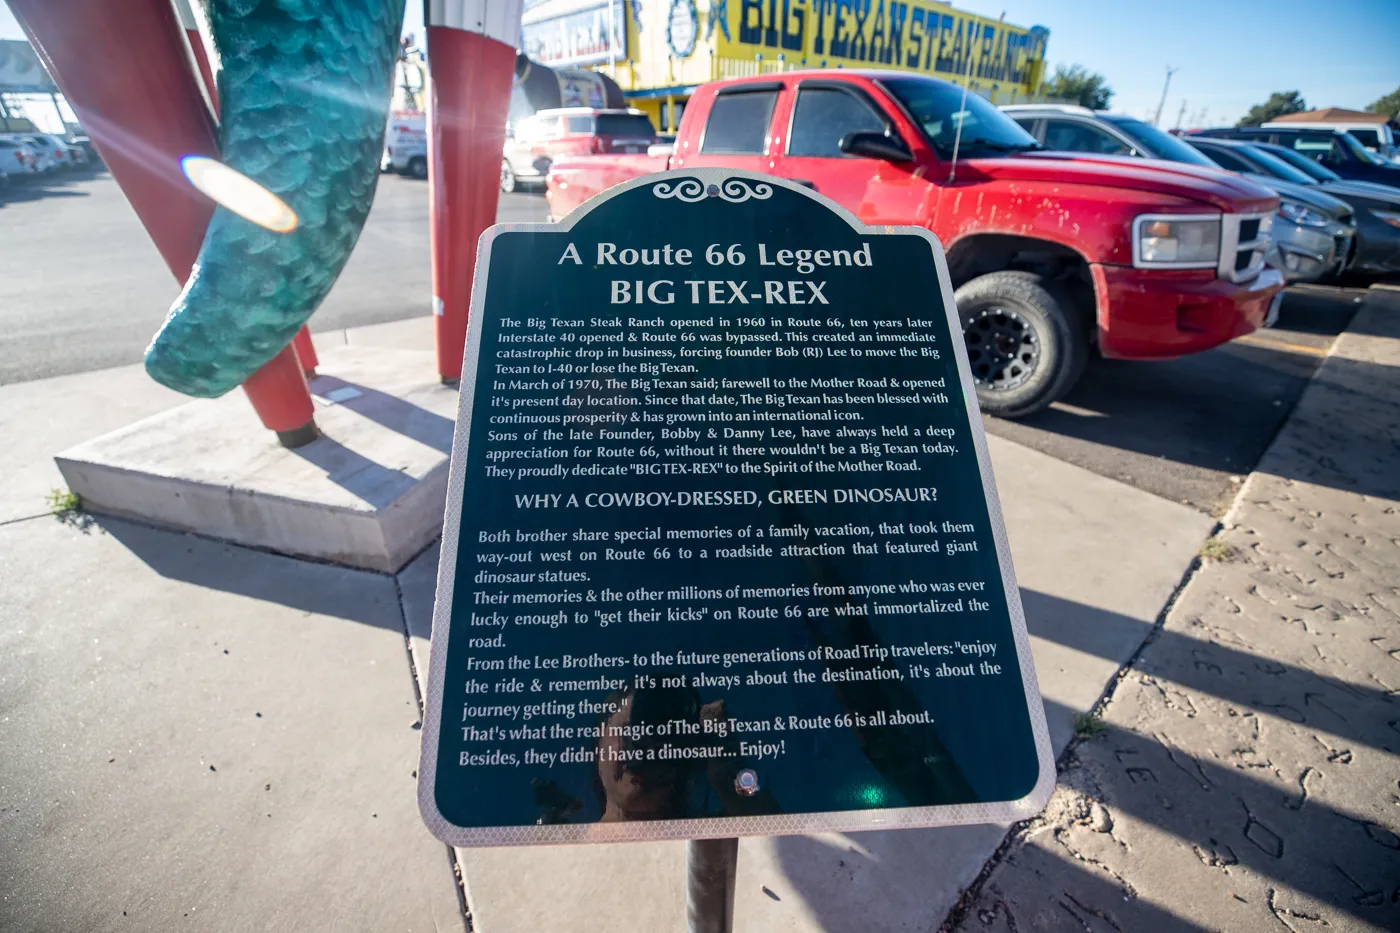 Big Tex Rex green cowboy dinosaur at The Big Texan Steak Ranch in Amarillo, Texas